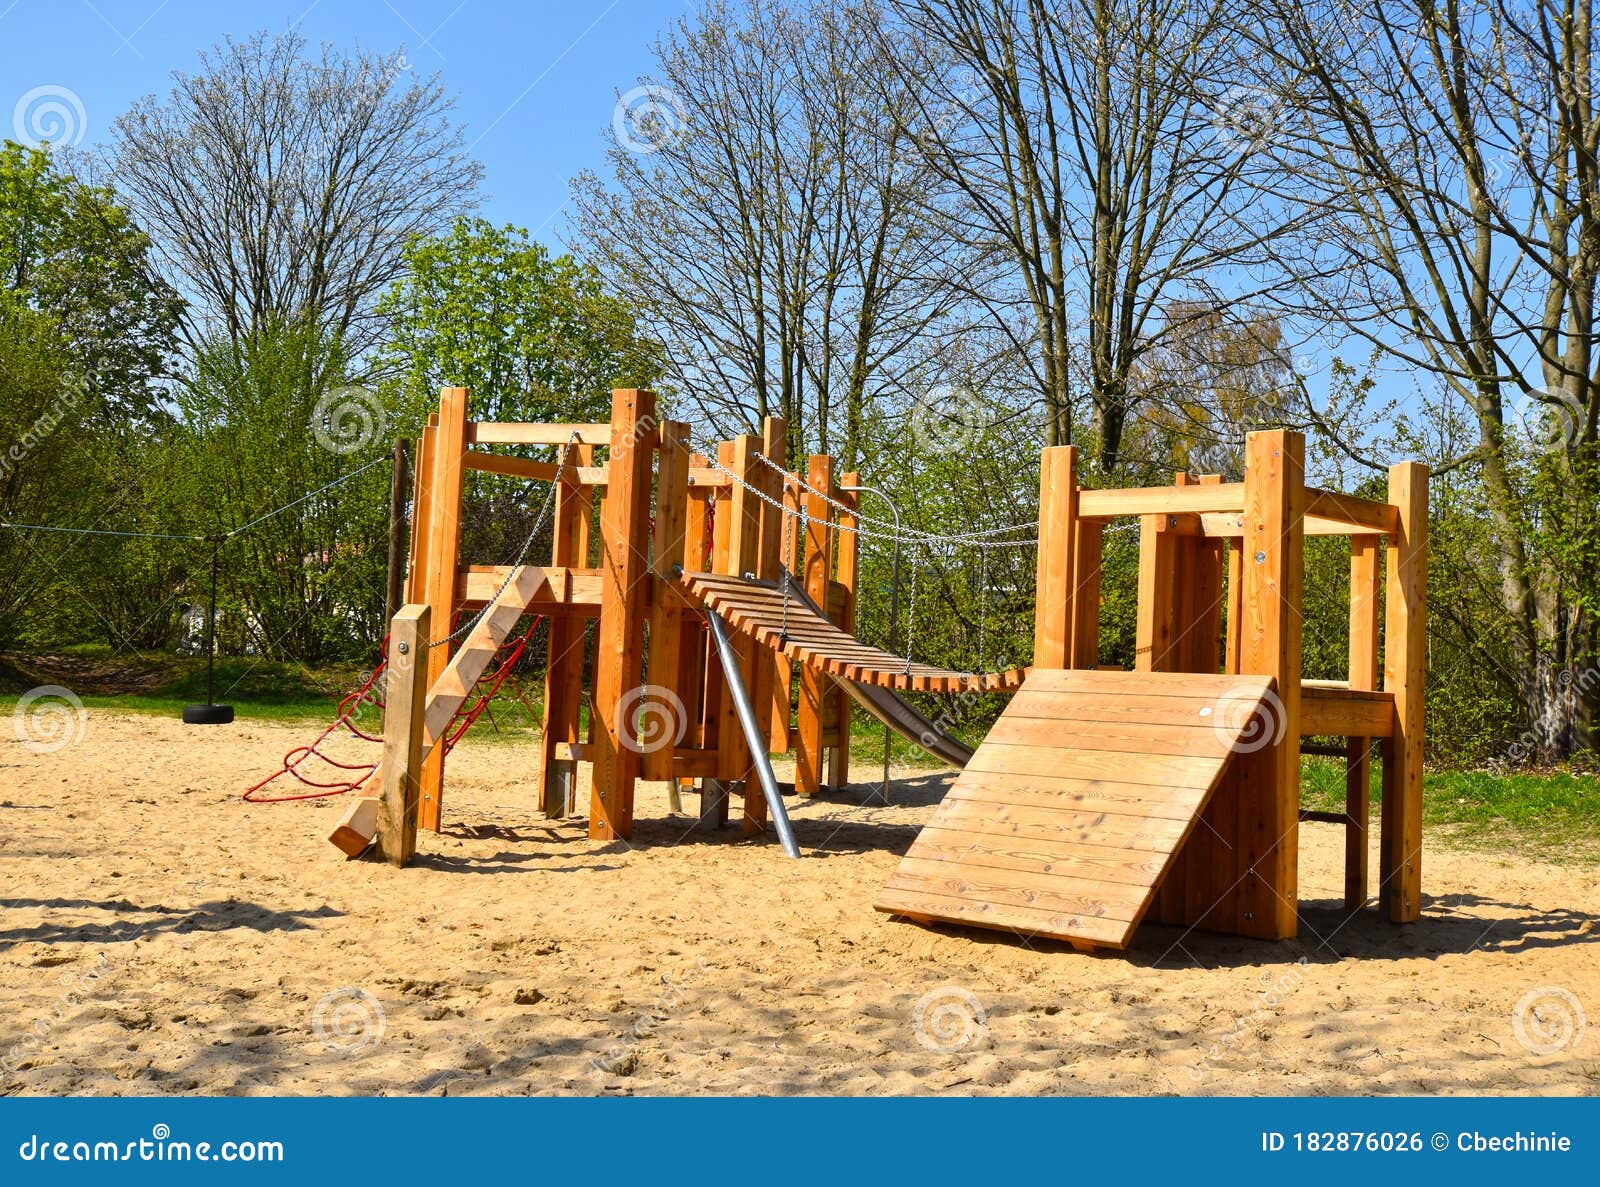 wooden playground equipment